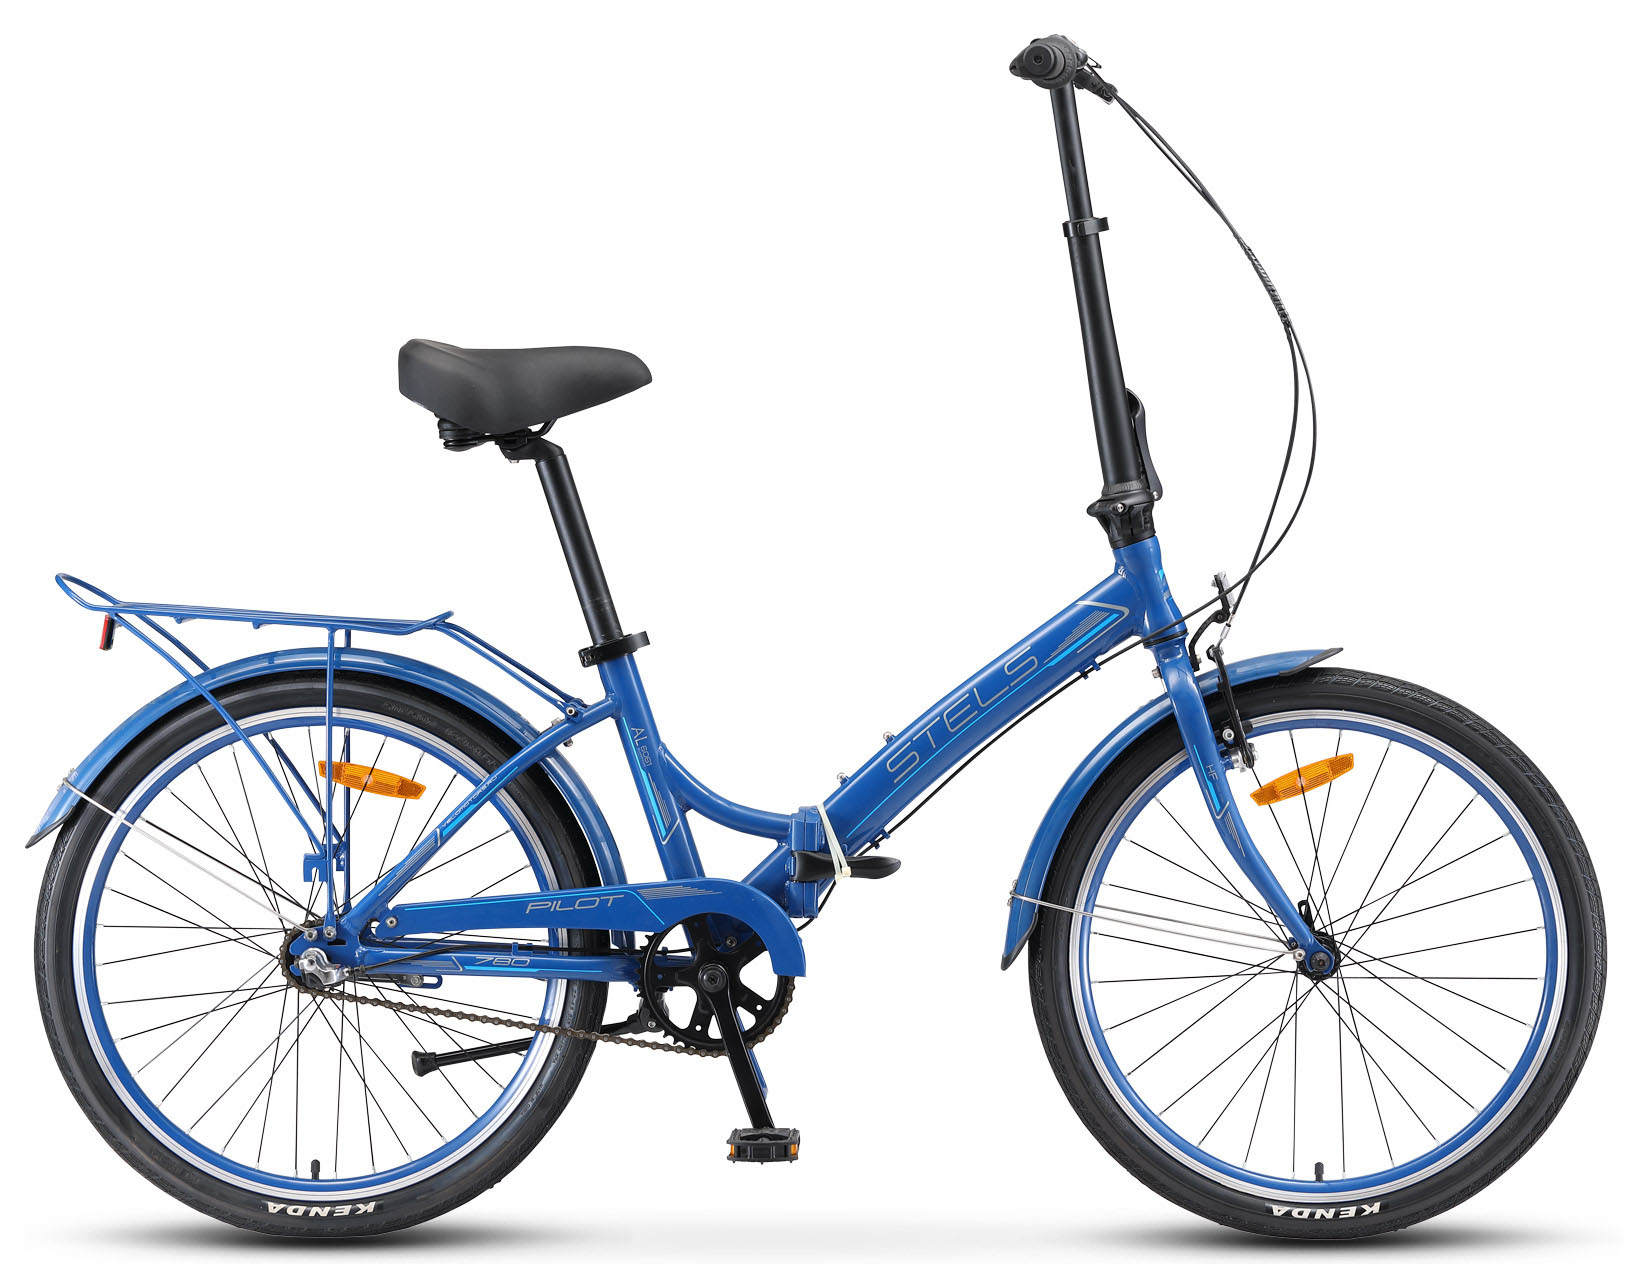  Велосипед Stels Pilot 780 24 V010 2019